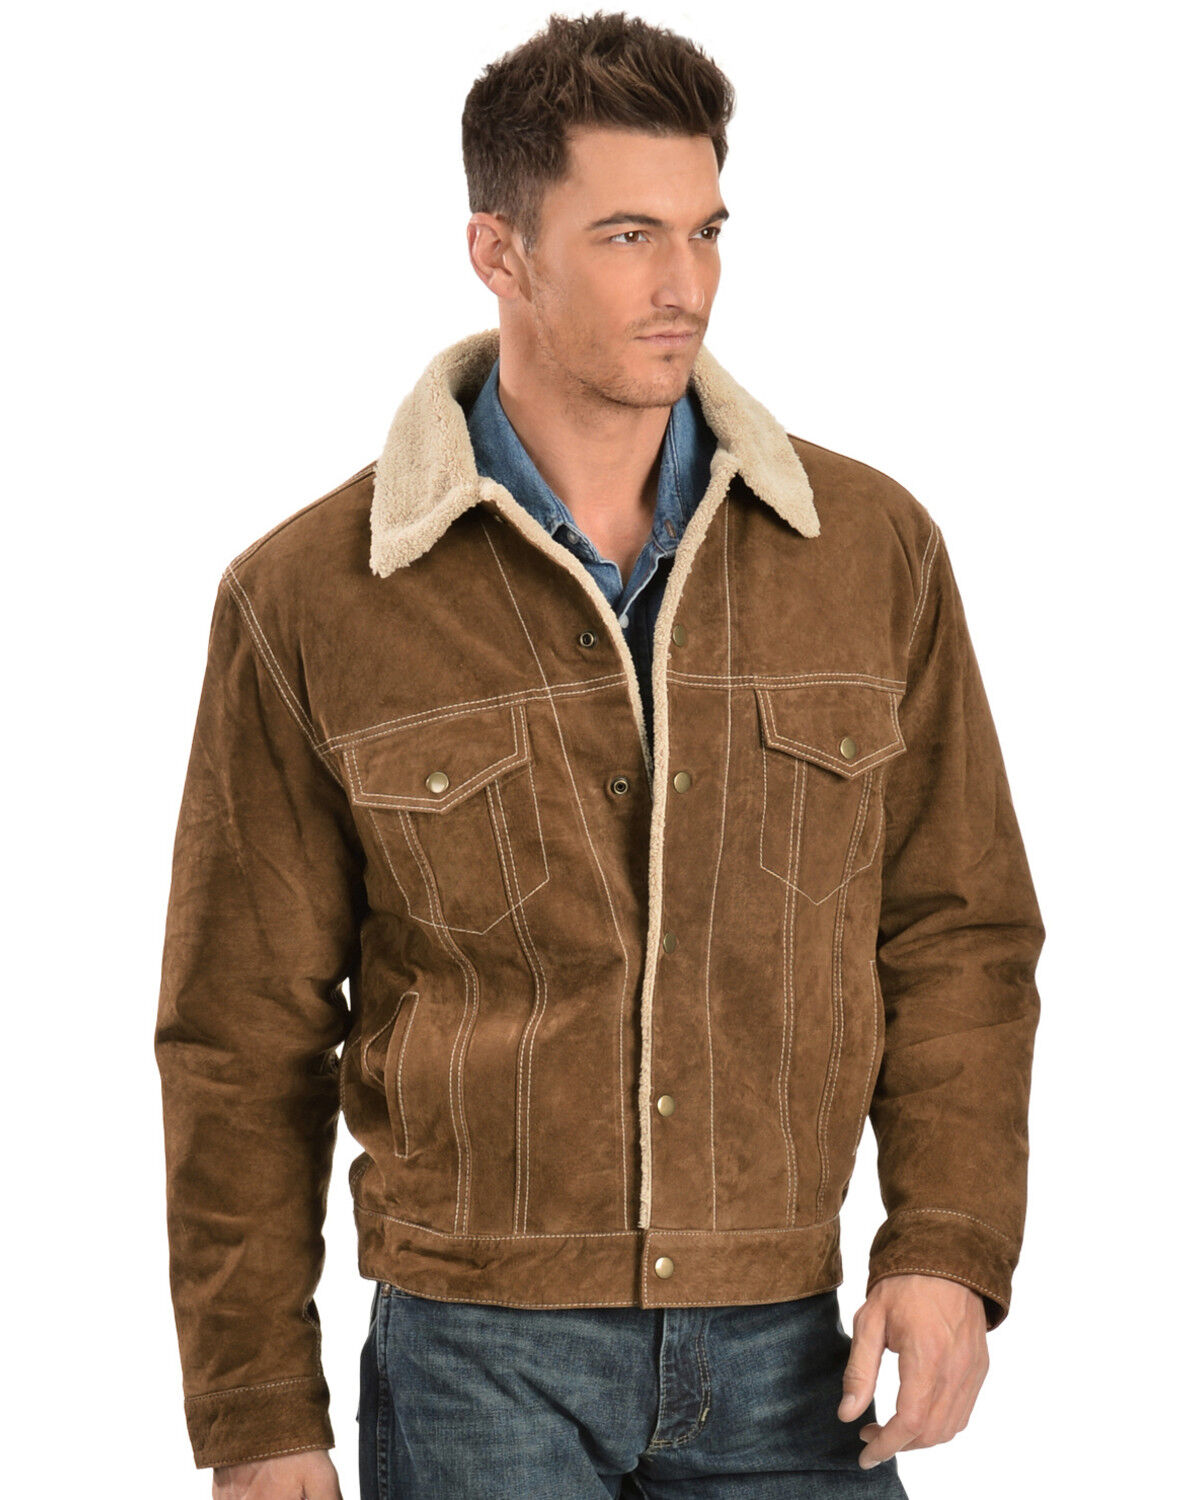 Куртка шерпа мужская. Sherpa Jacket мужская. Куртка шерпа мужская коричневая. Sherpa-lined Jacket. Шерпа кожаная куртка.